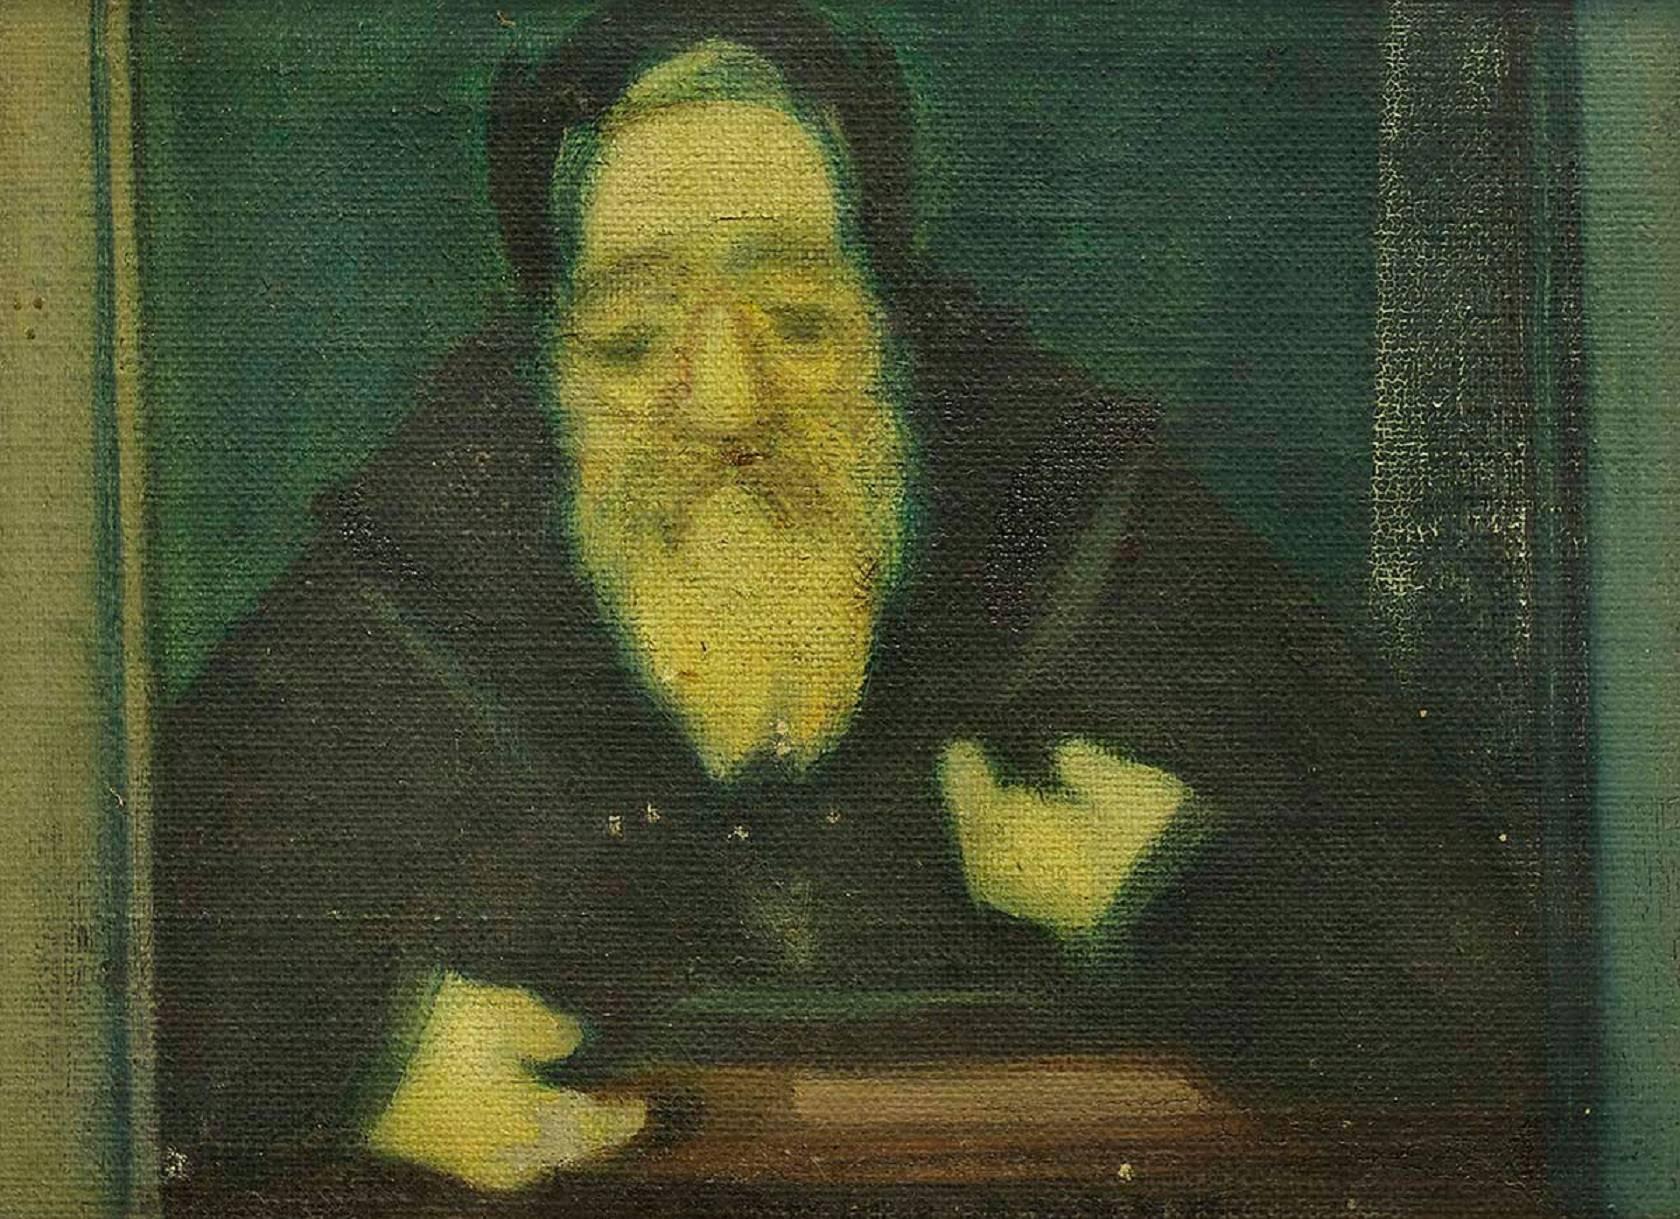 Rabbi in Study - Modern Painting by Avraham Goldberg